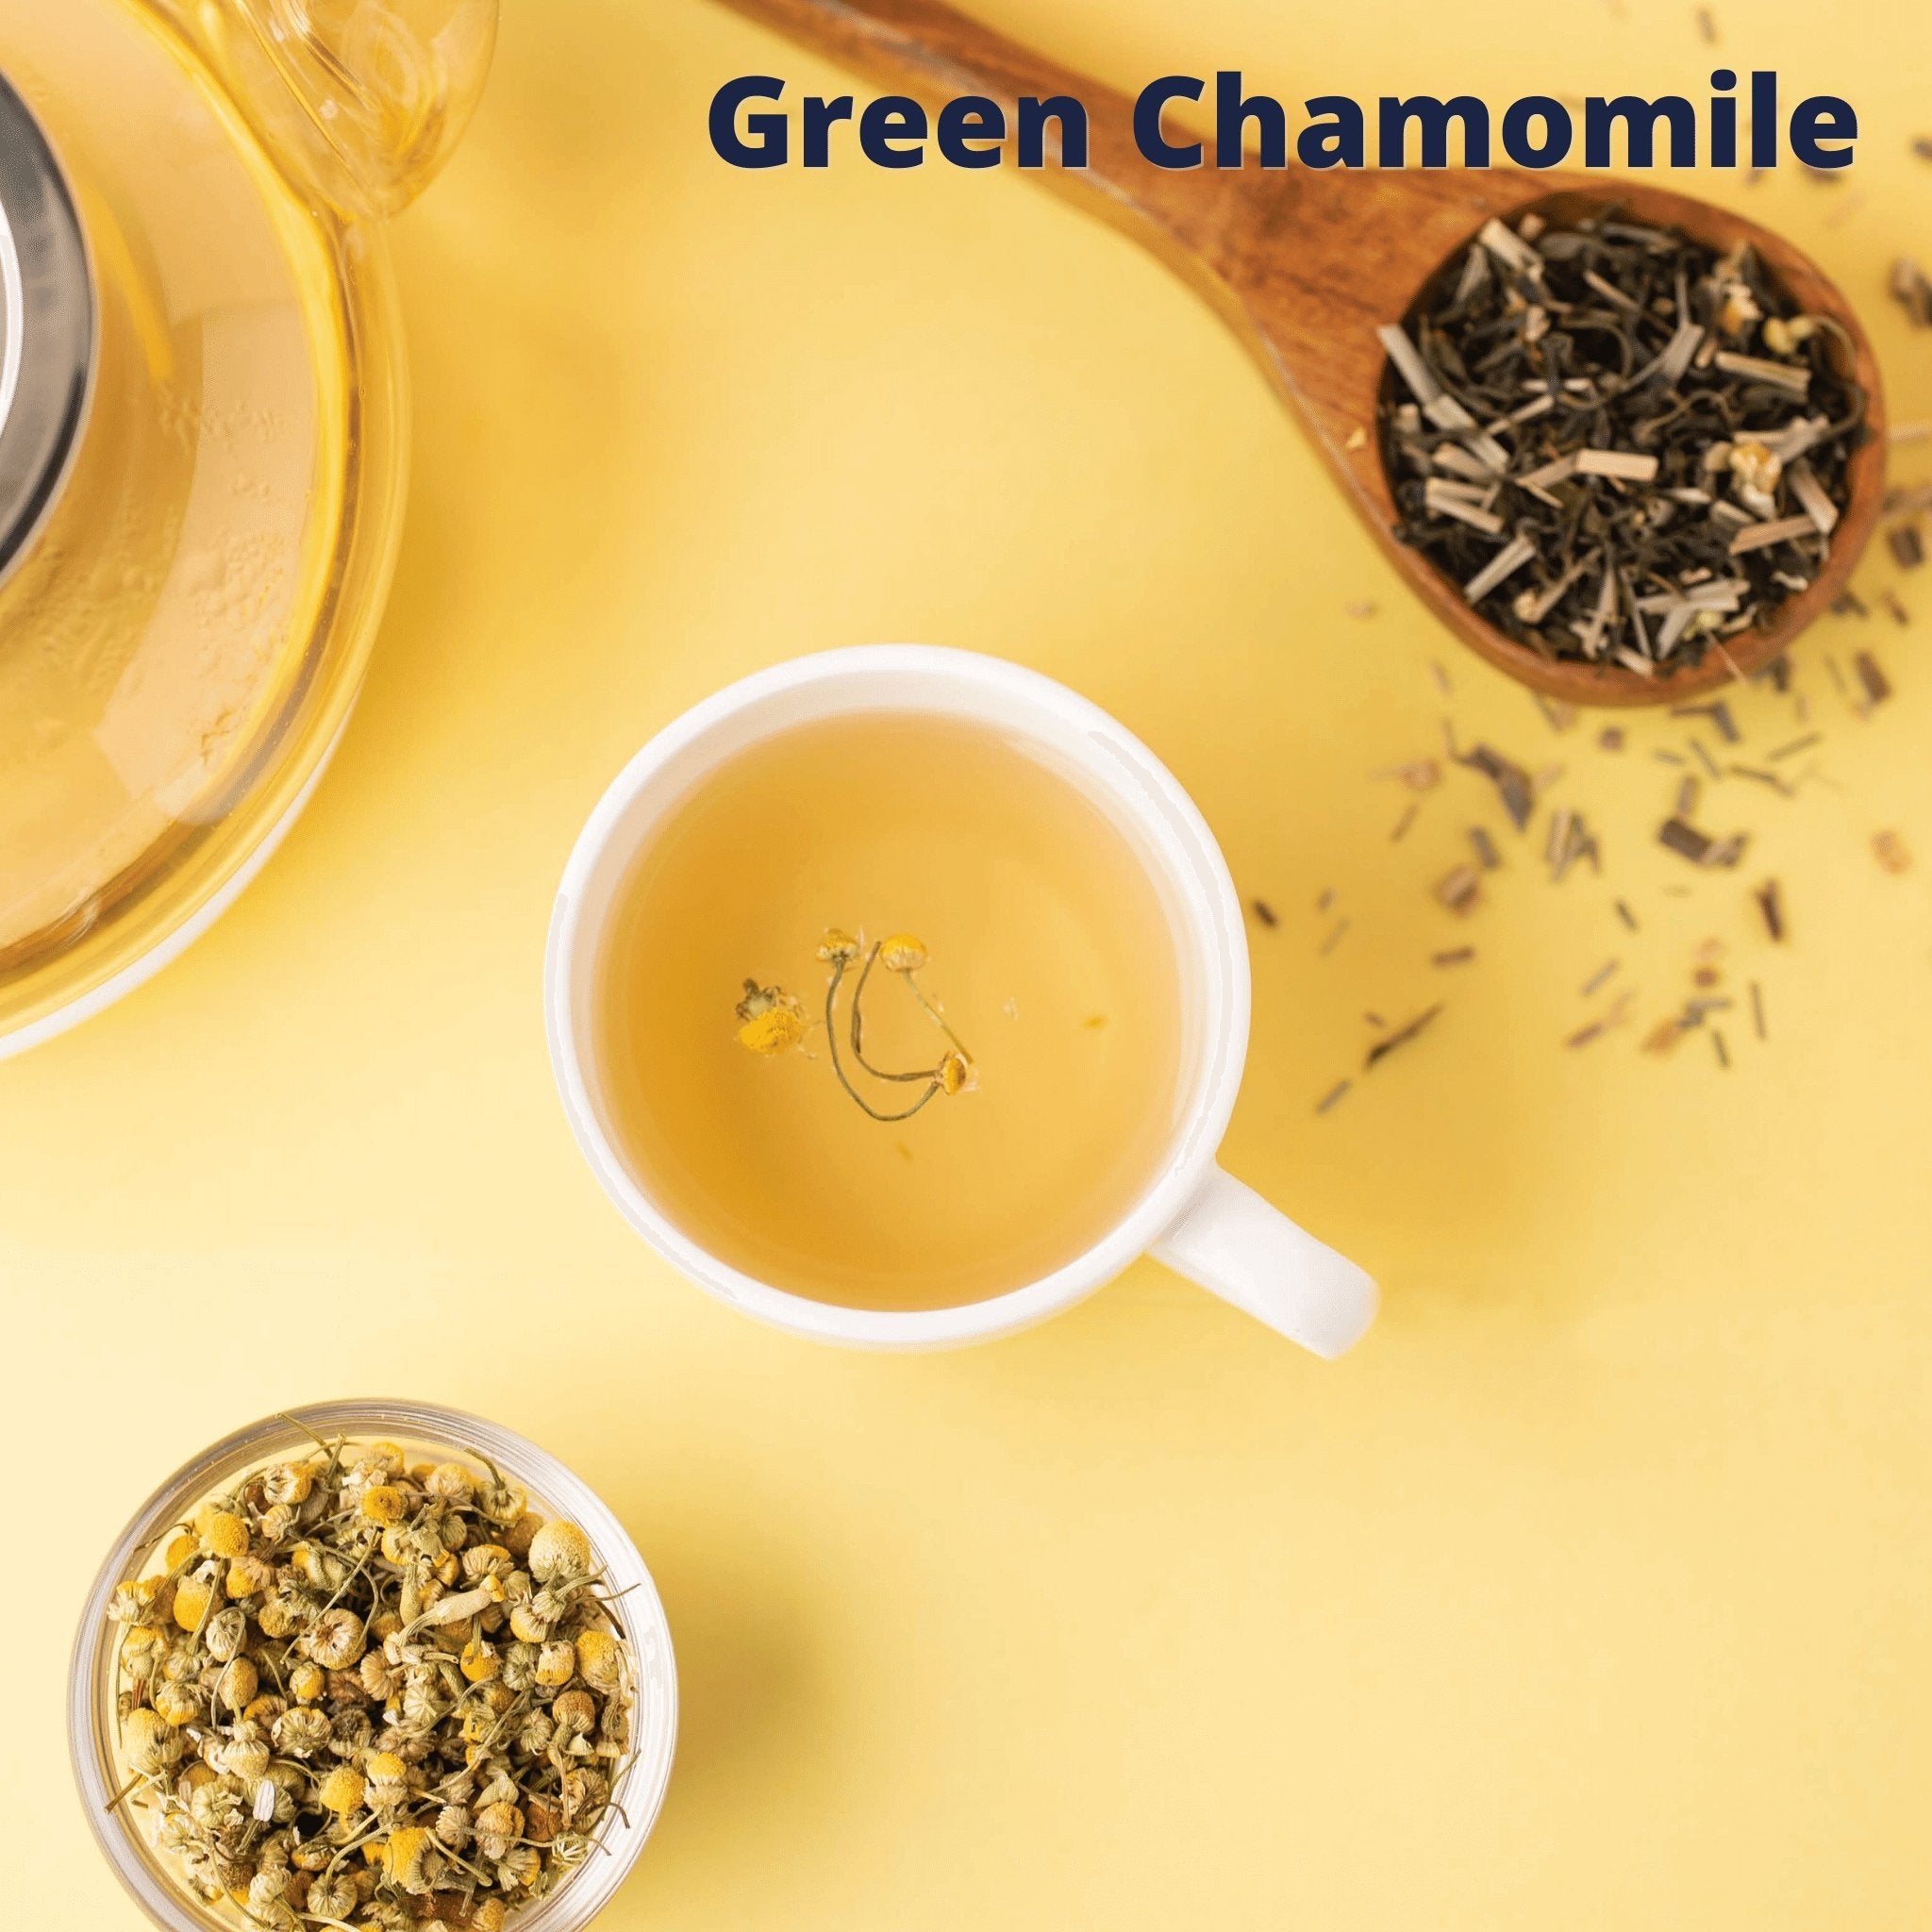 Green Tea Bundle - Mosi Tea